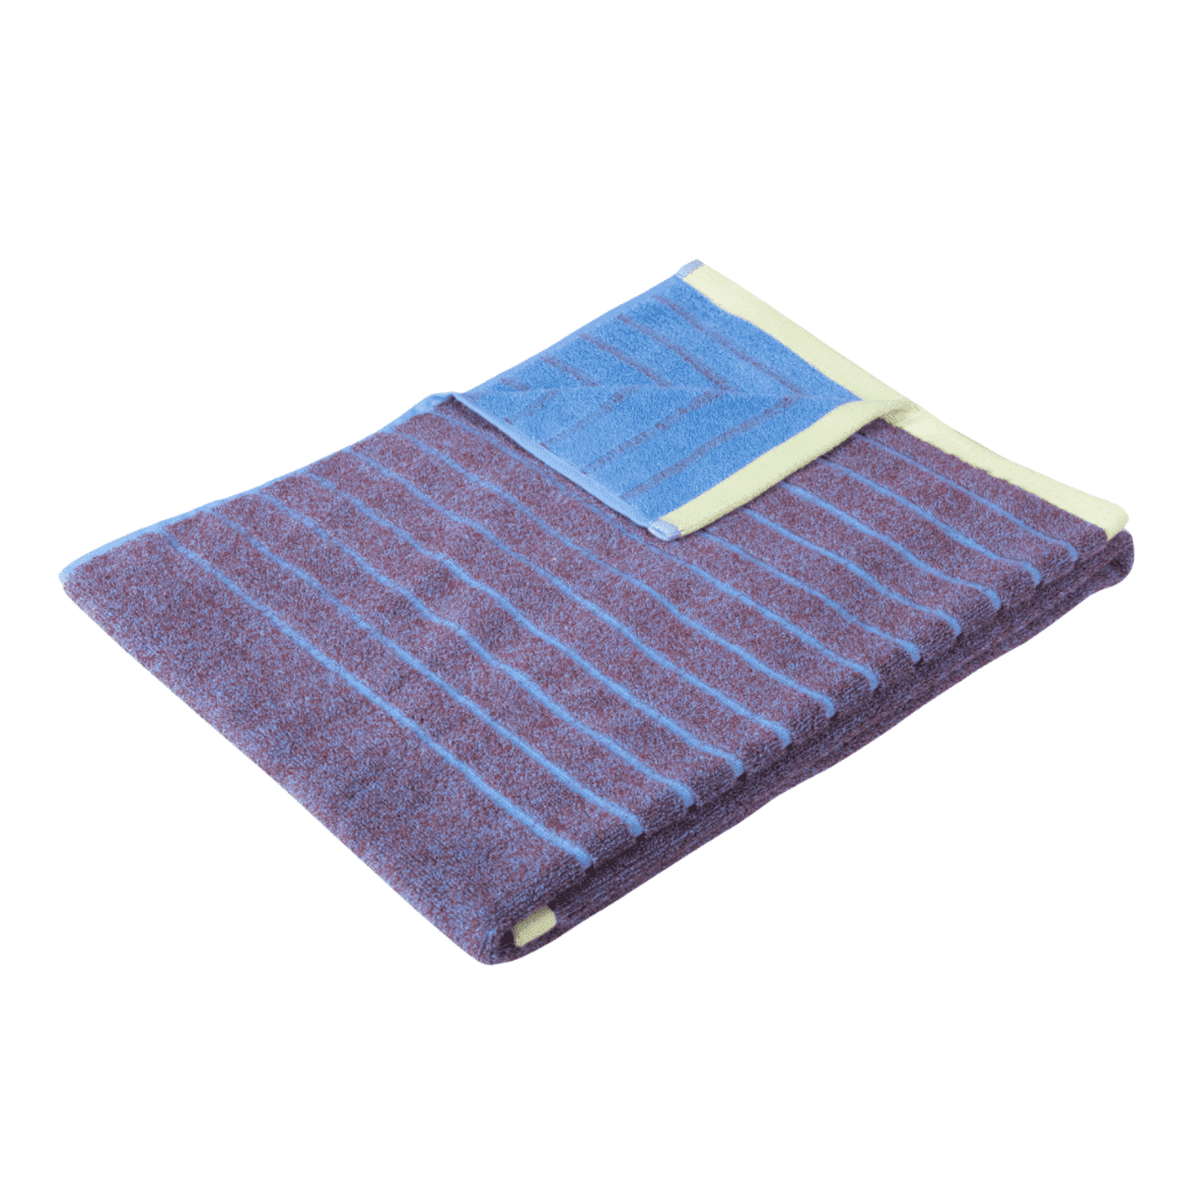 Billede af Hübsch Promenade towel large - 70x140cm - purple/blue